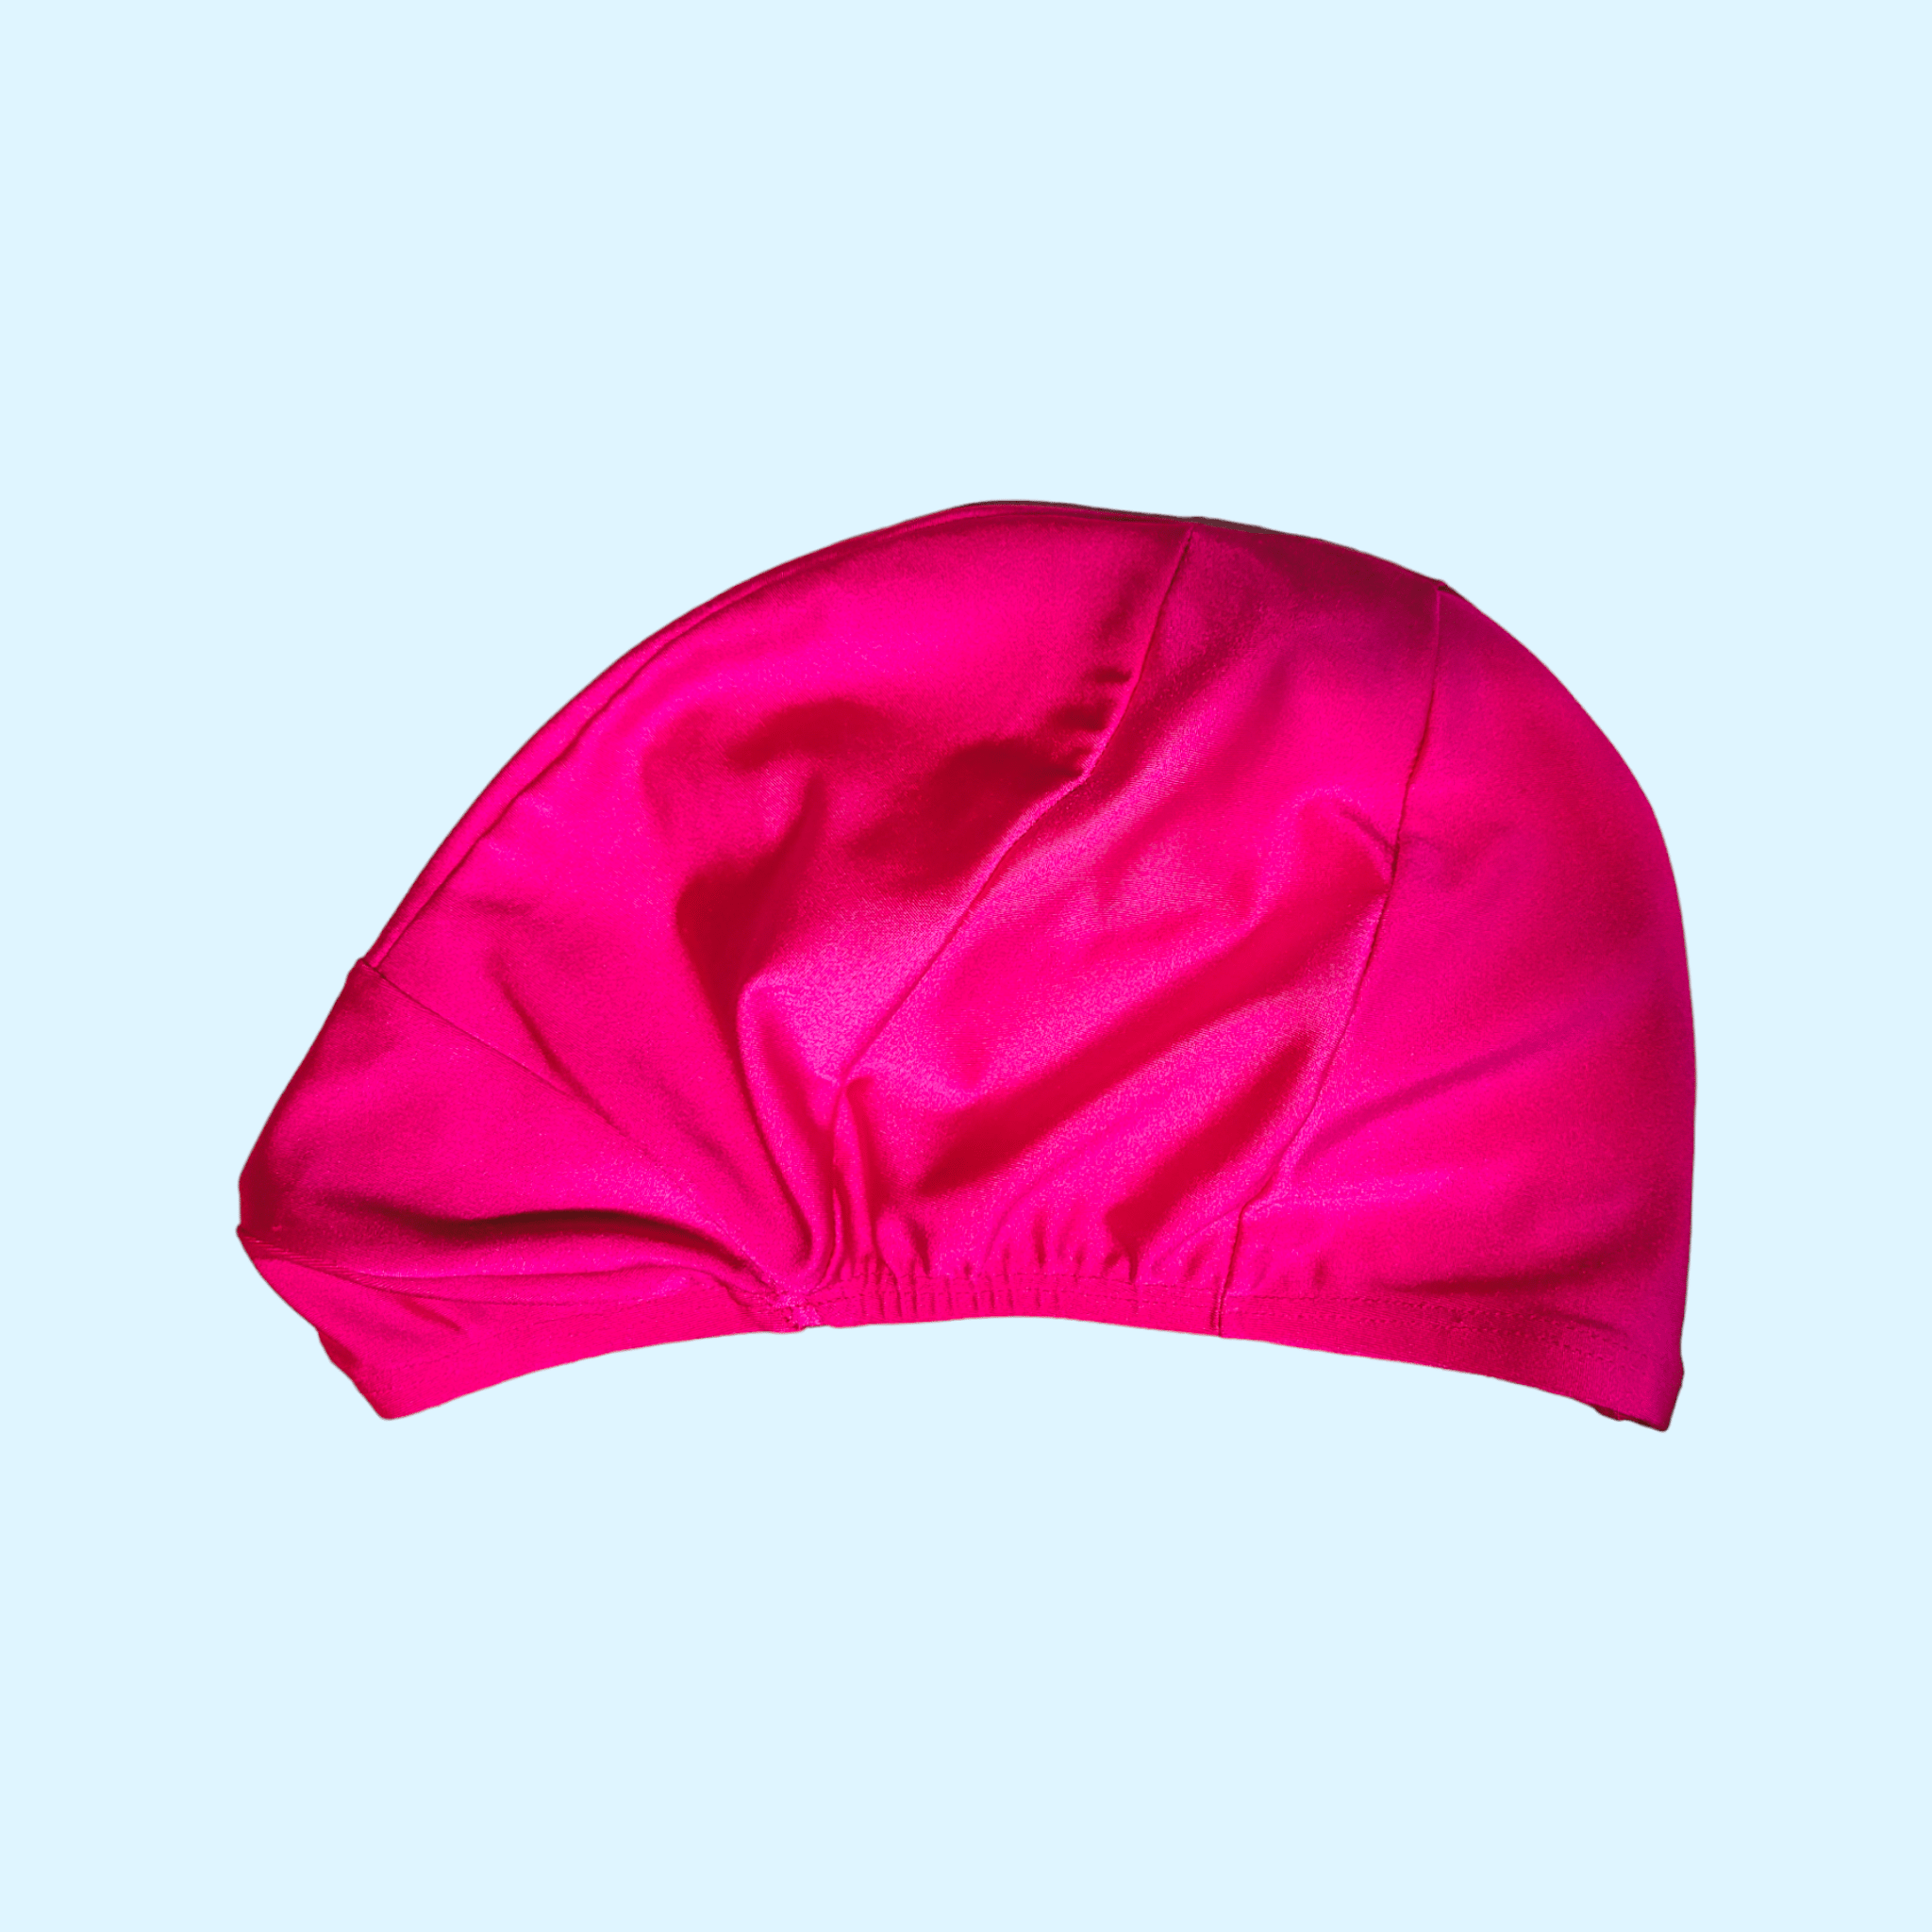 Ovation Lycra Helmet Cover in Hot Pink